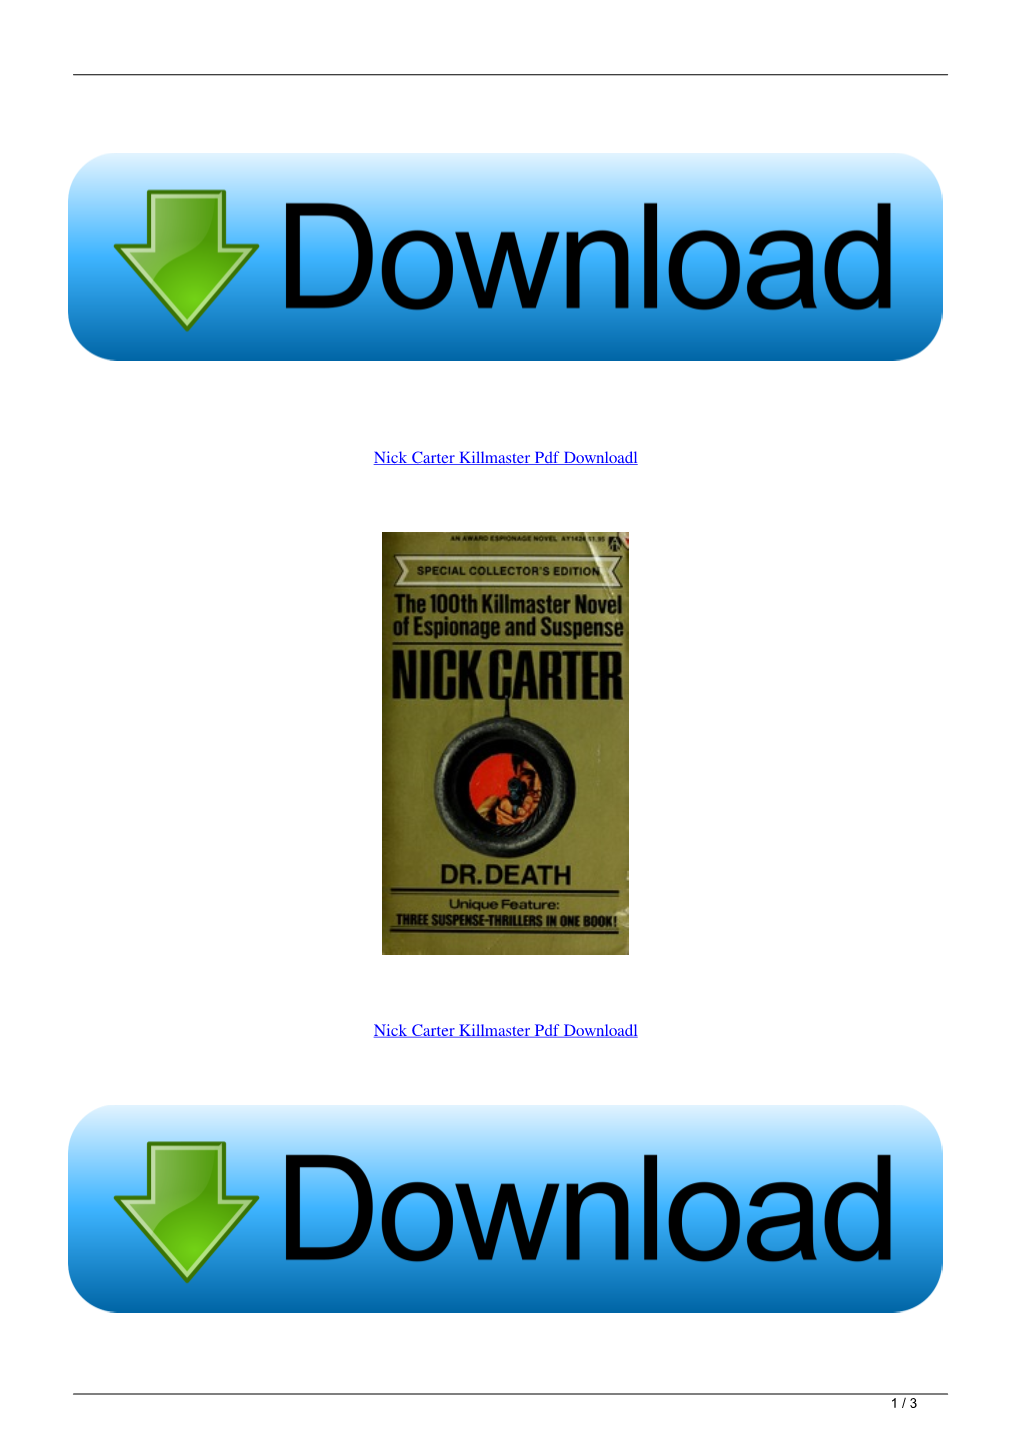 Nick Carter Killmaster Pdf Downloadl